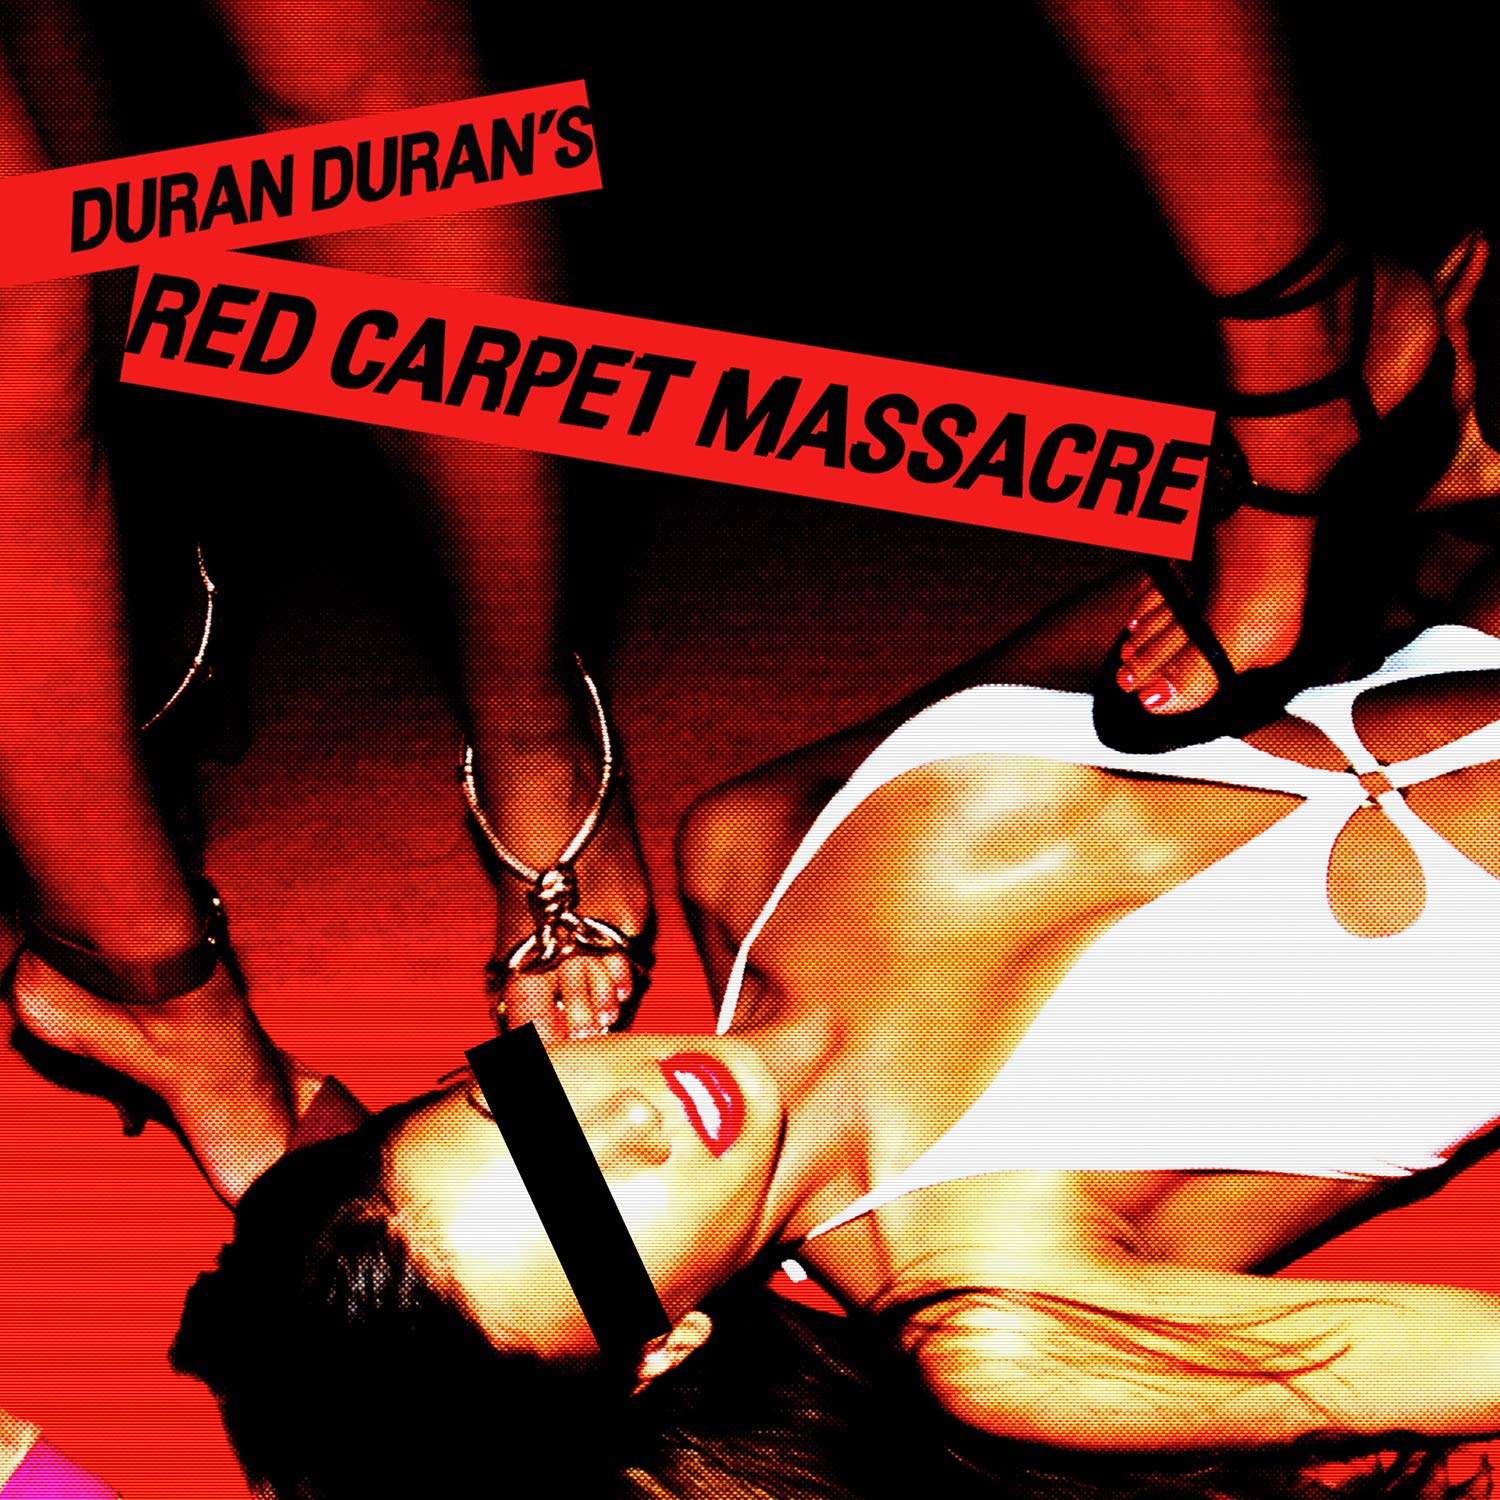 silverchair виниловая пластинка silverchair pure massacre Виниловая пластинка Duran Duran, Red Carpet Massacre (4050538777314)